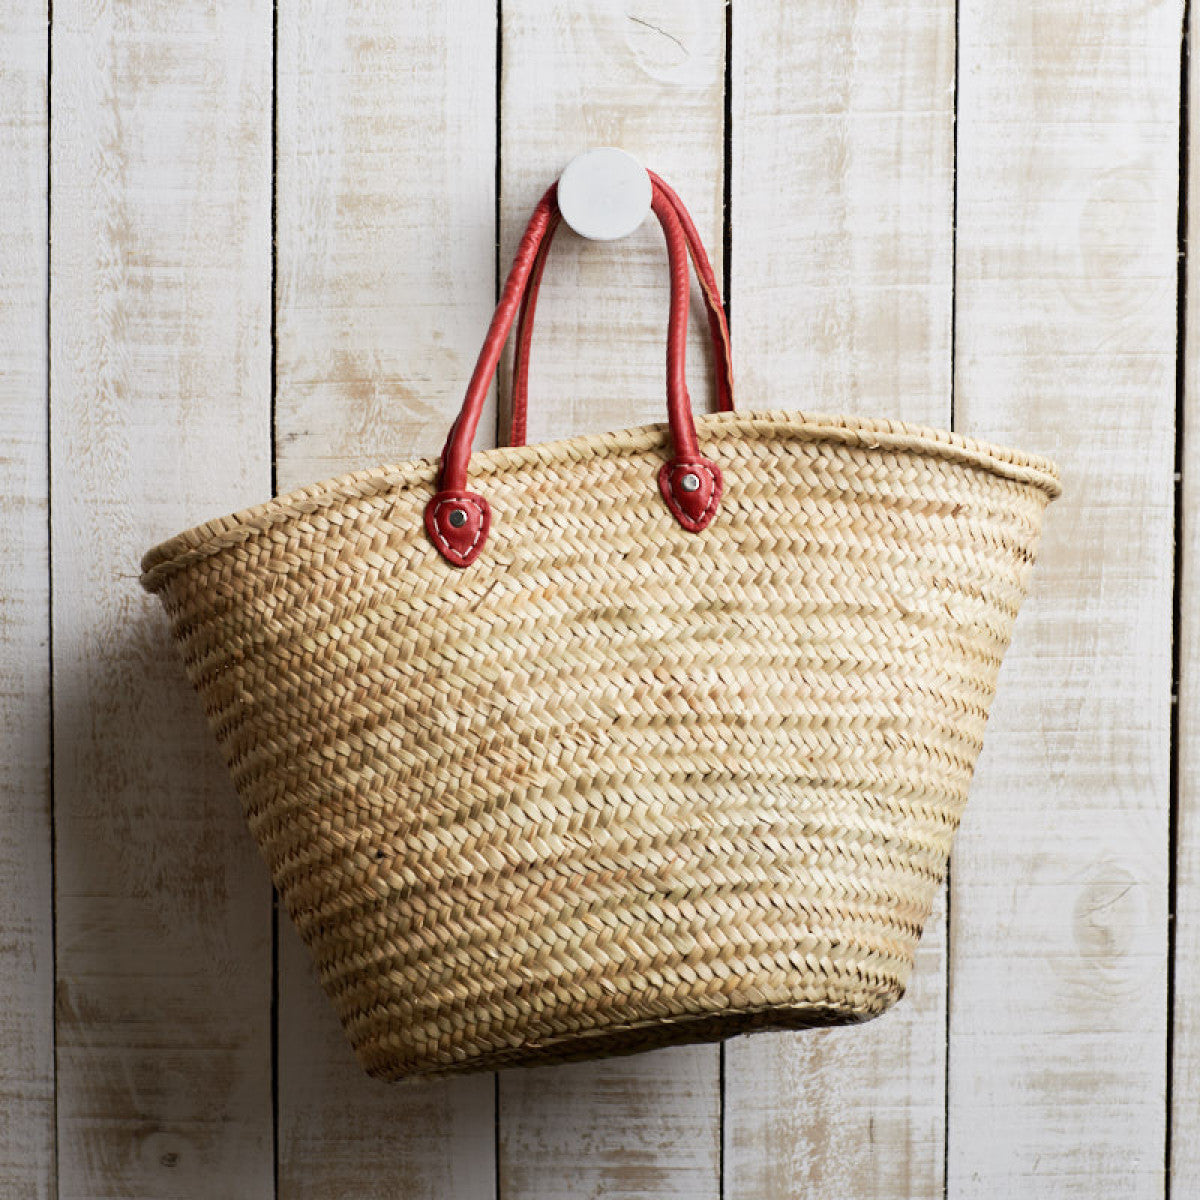 Market basket- leather handle